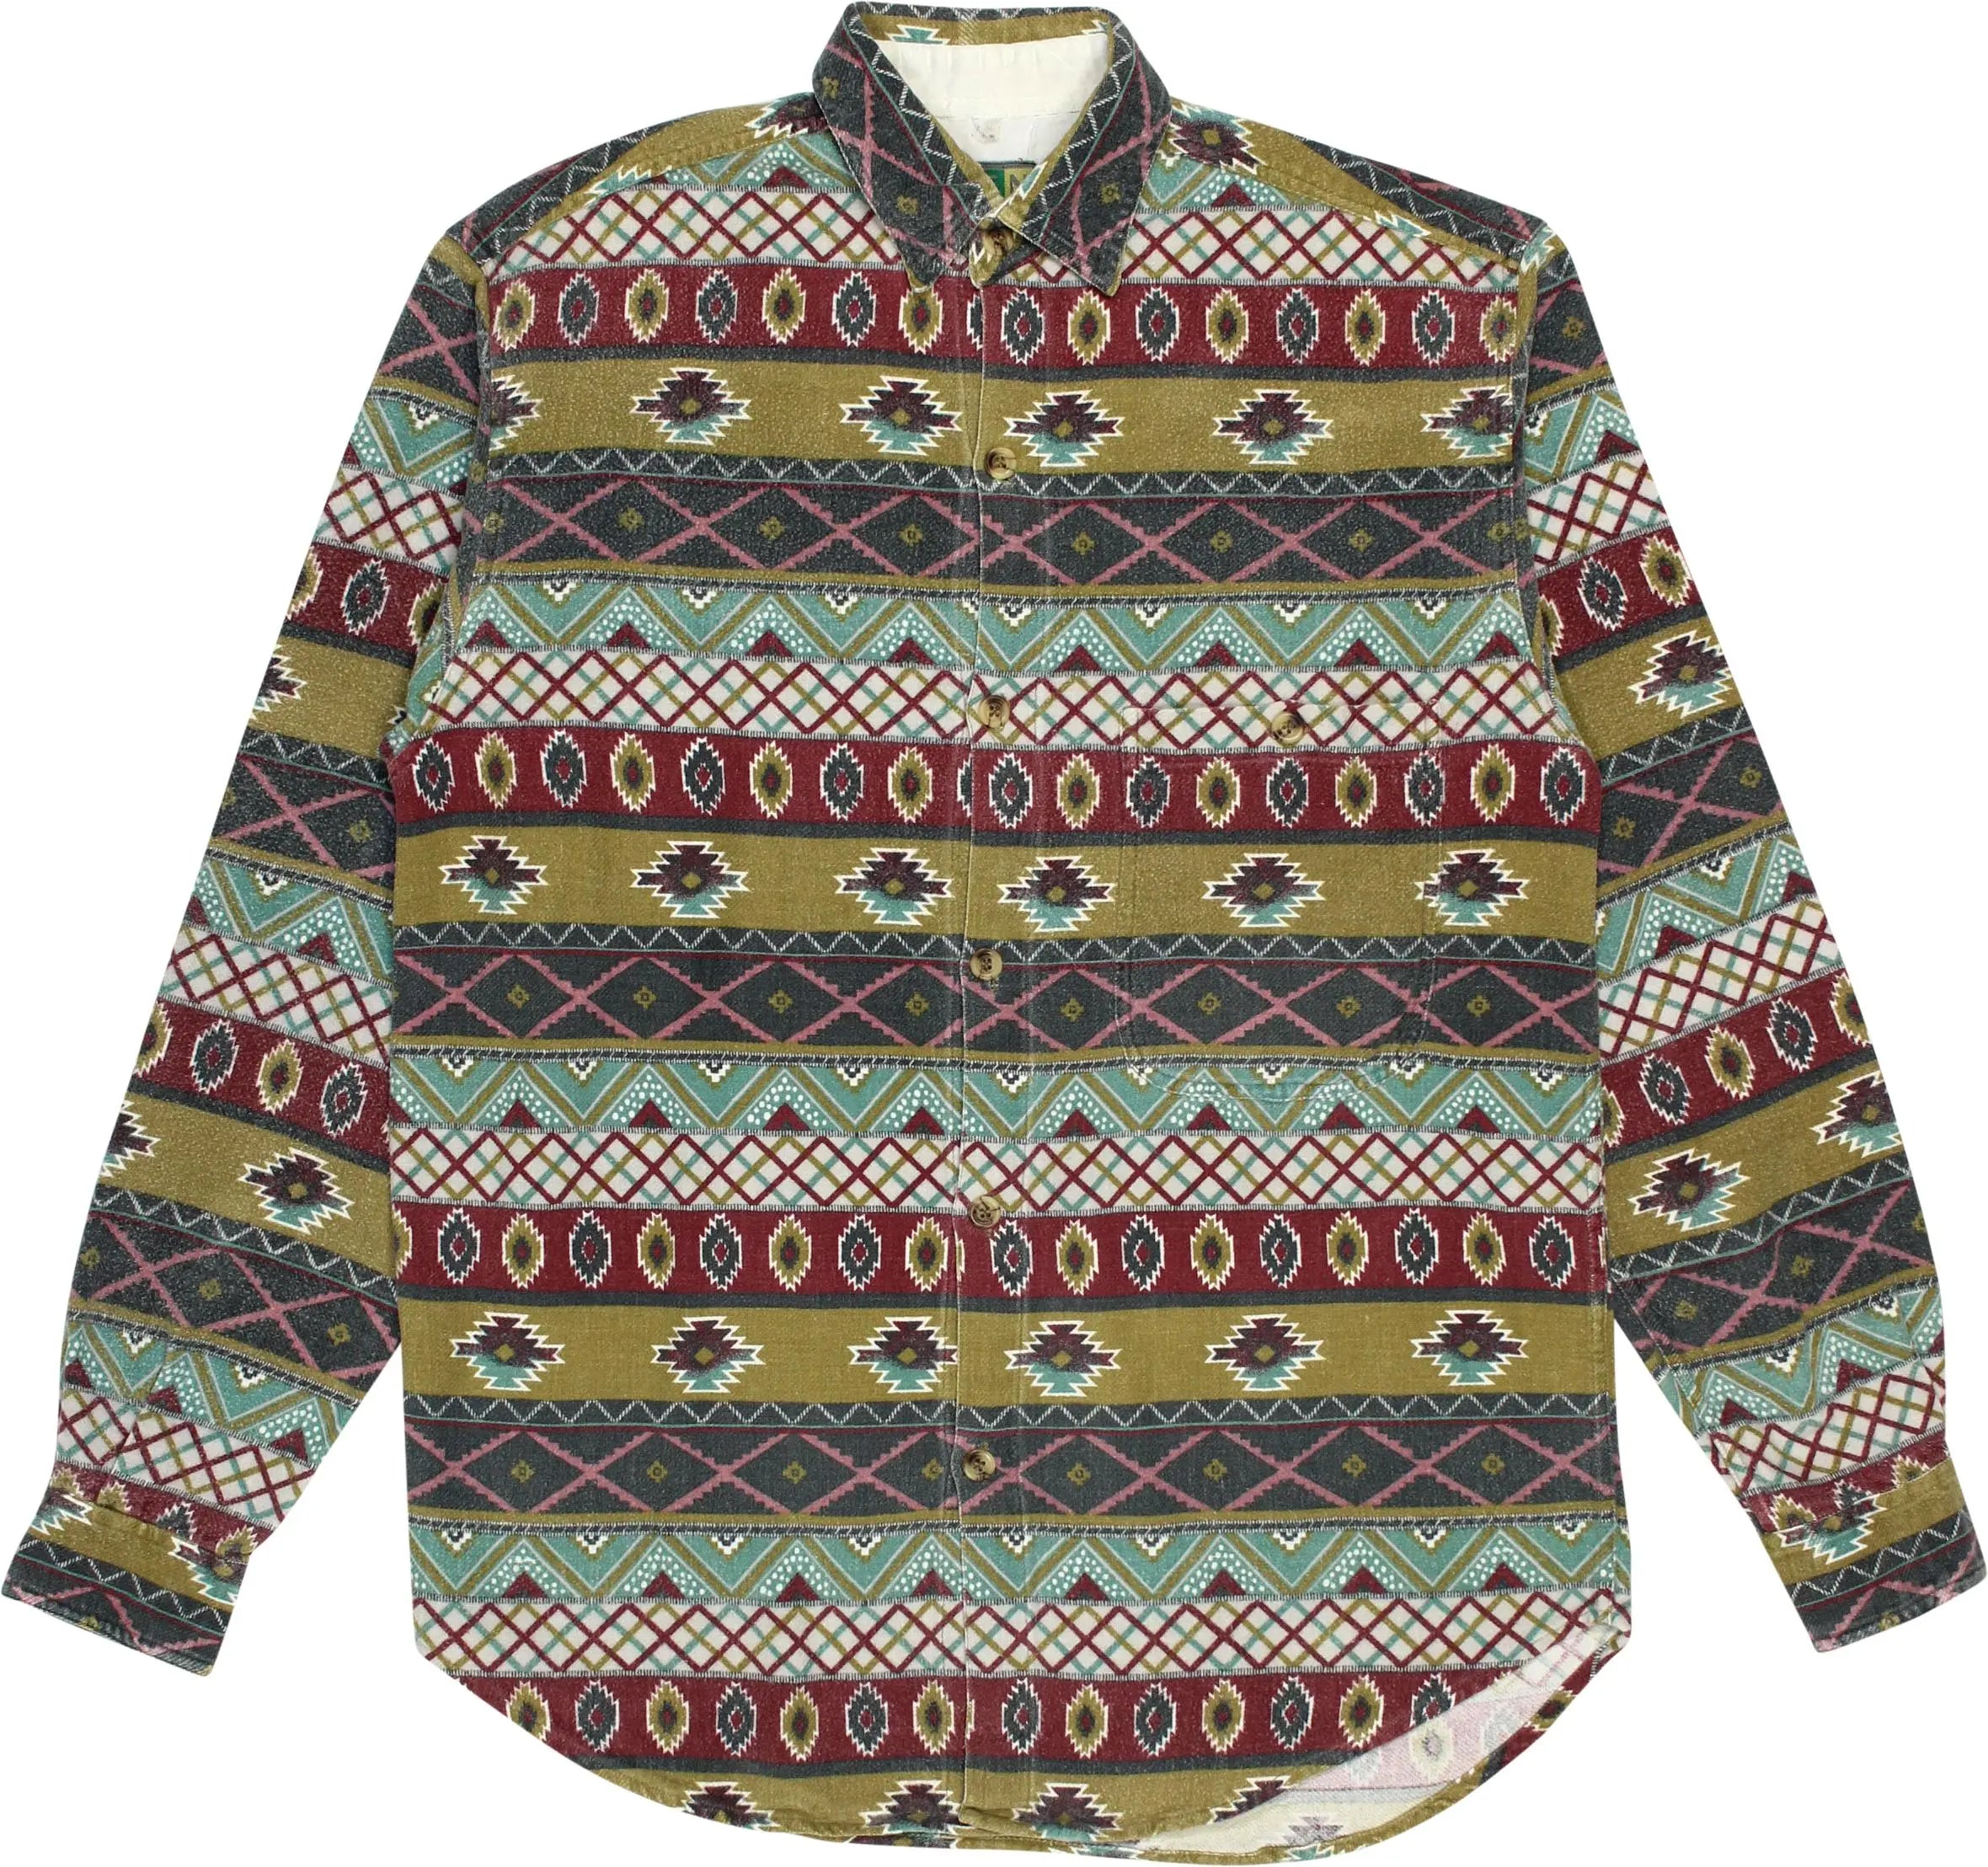 ZEN - Aztec Flannel Shirt- ThriftTale.com - Vintage and second handclothing